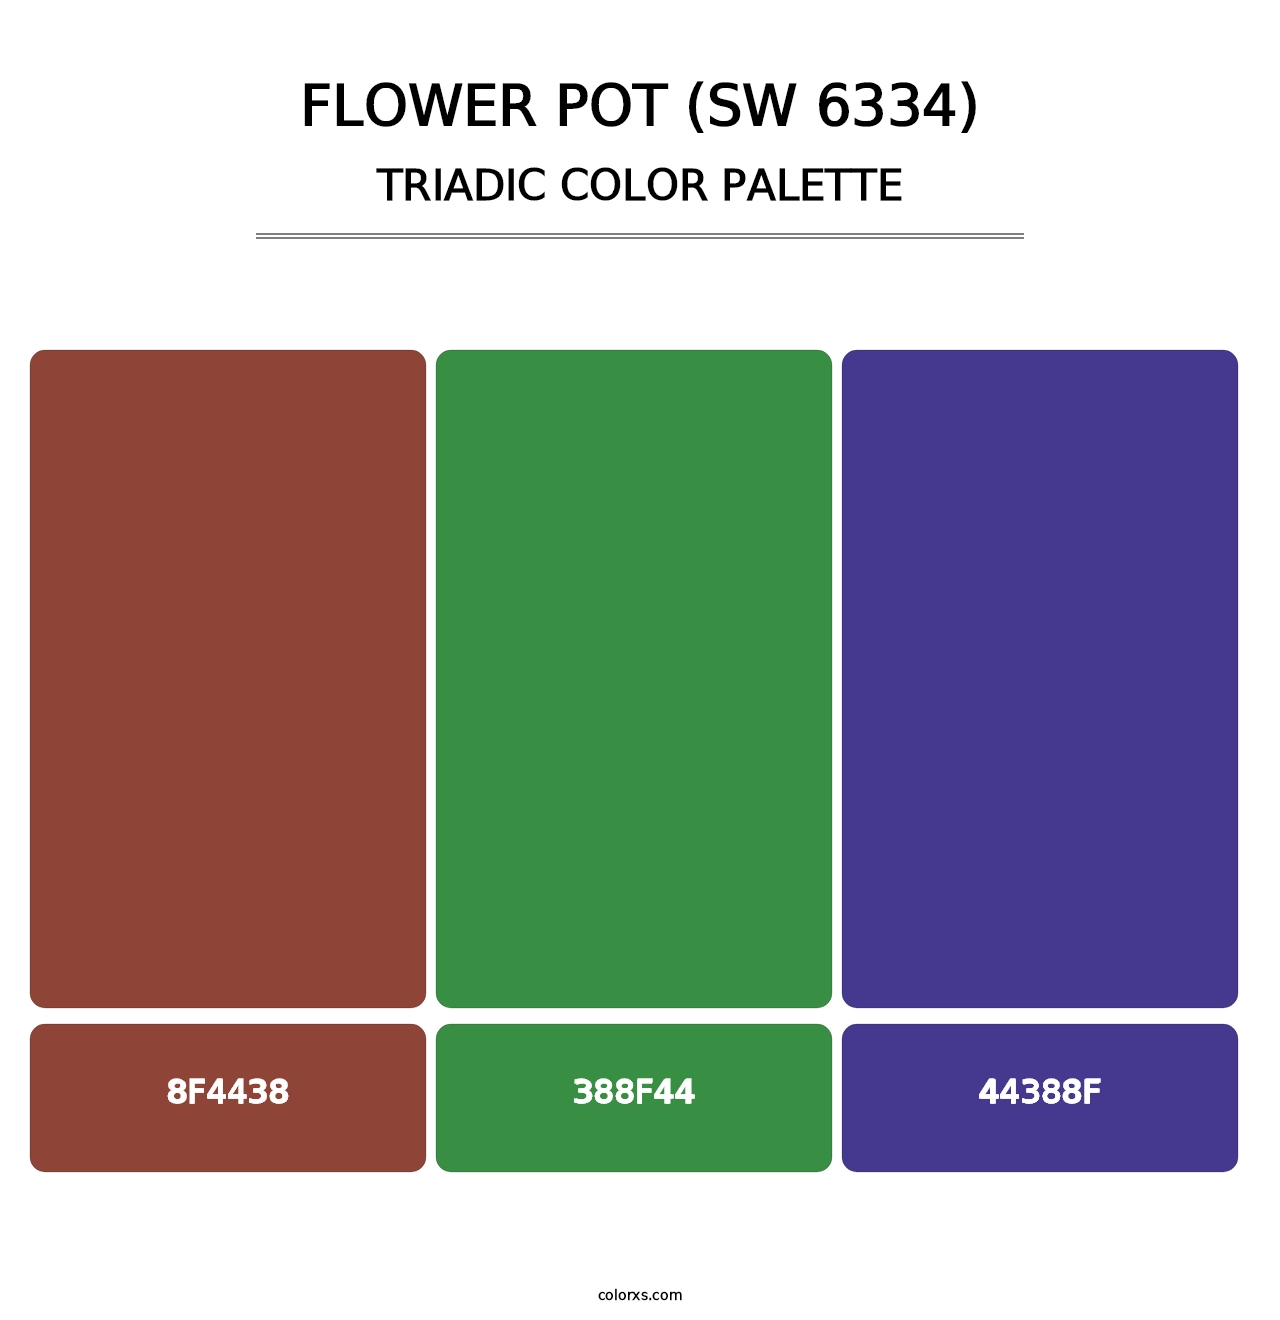 Flower Pot (SW 6334) - Triadic Color Palette